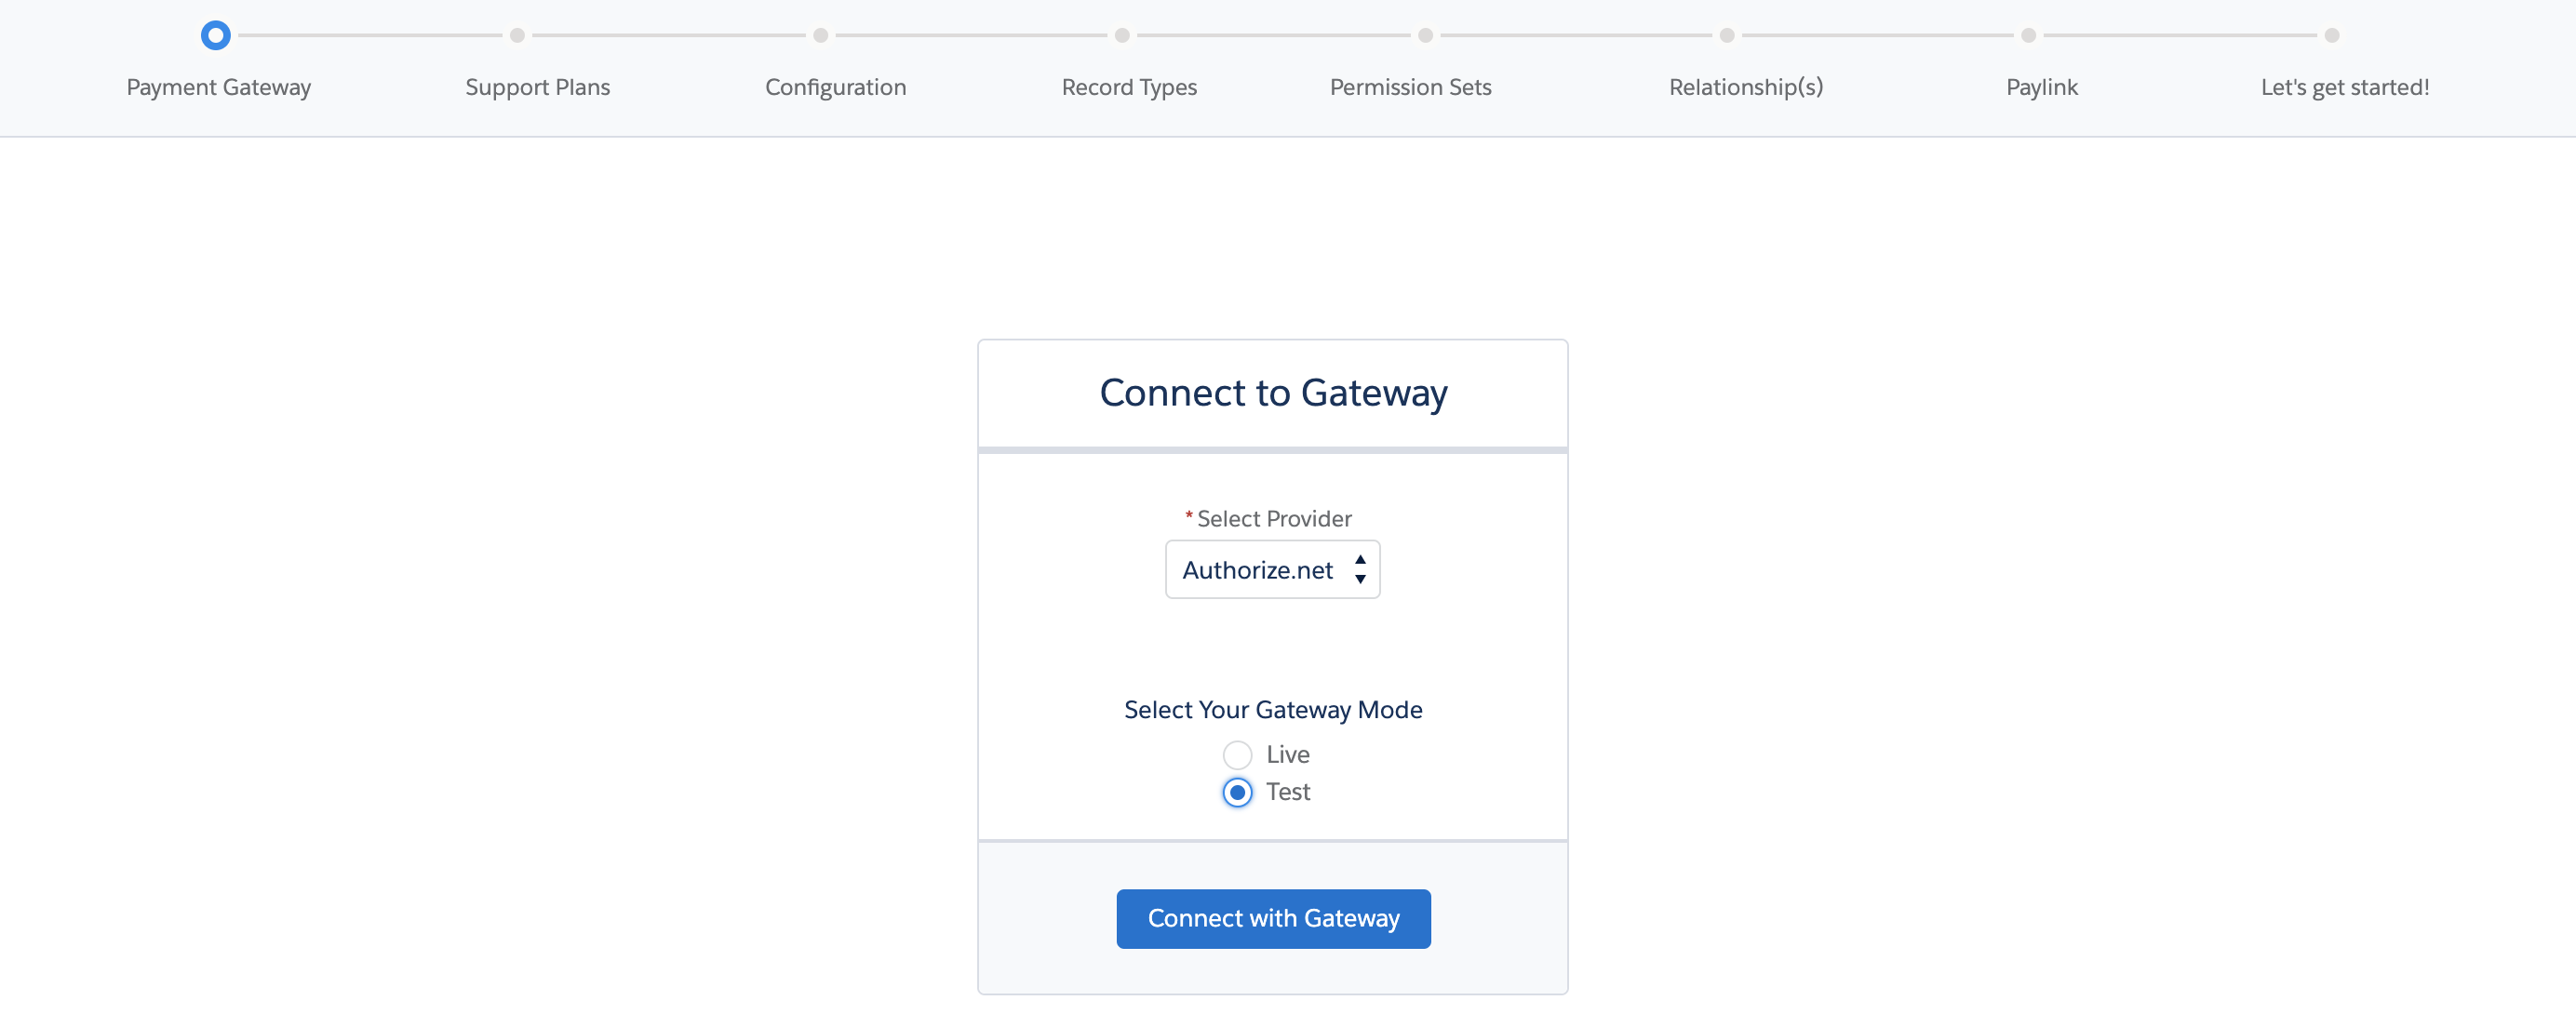 Payment Setup Wizard - Payment Gateway